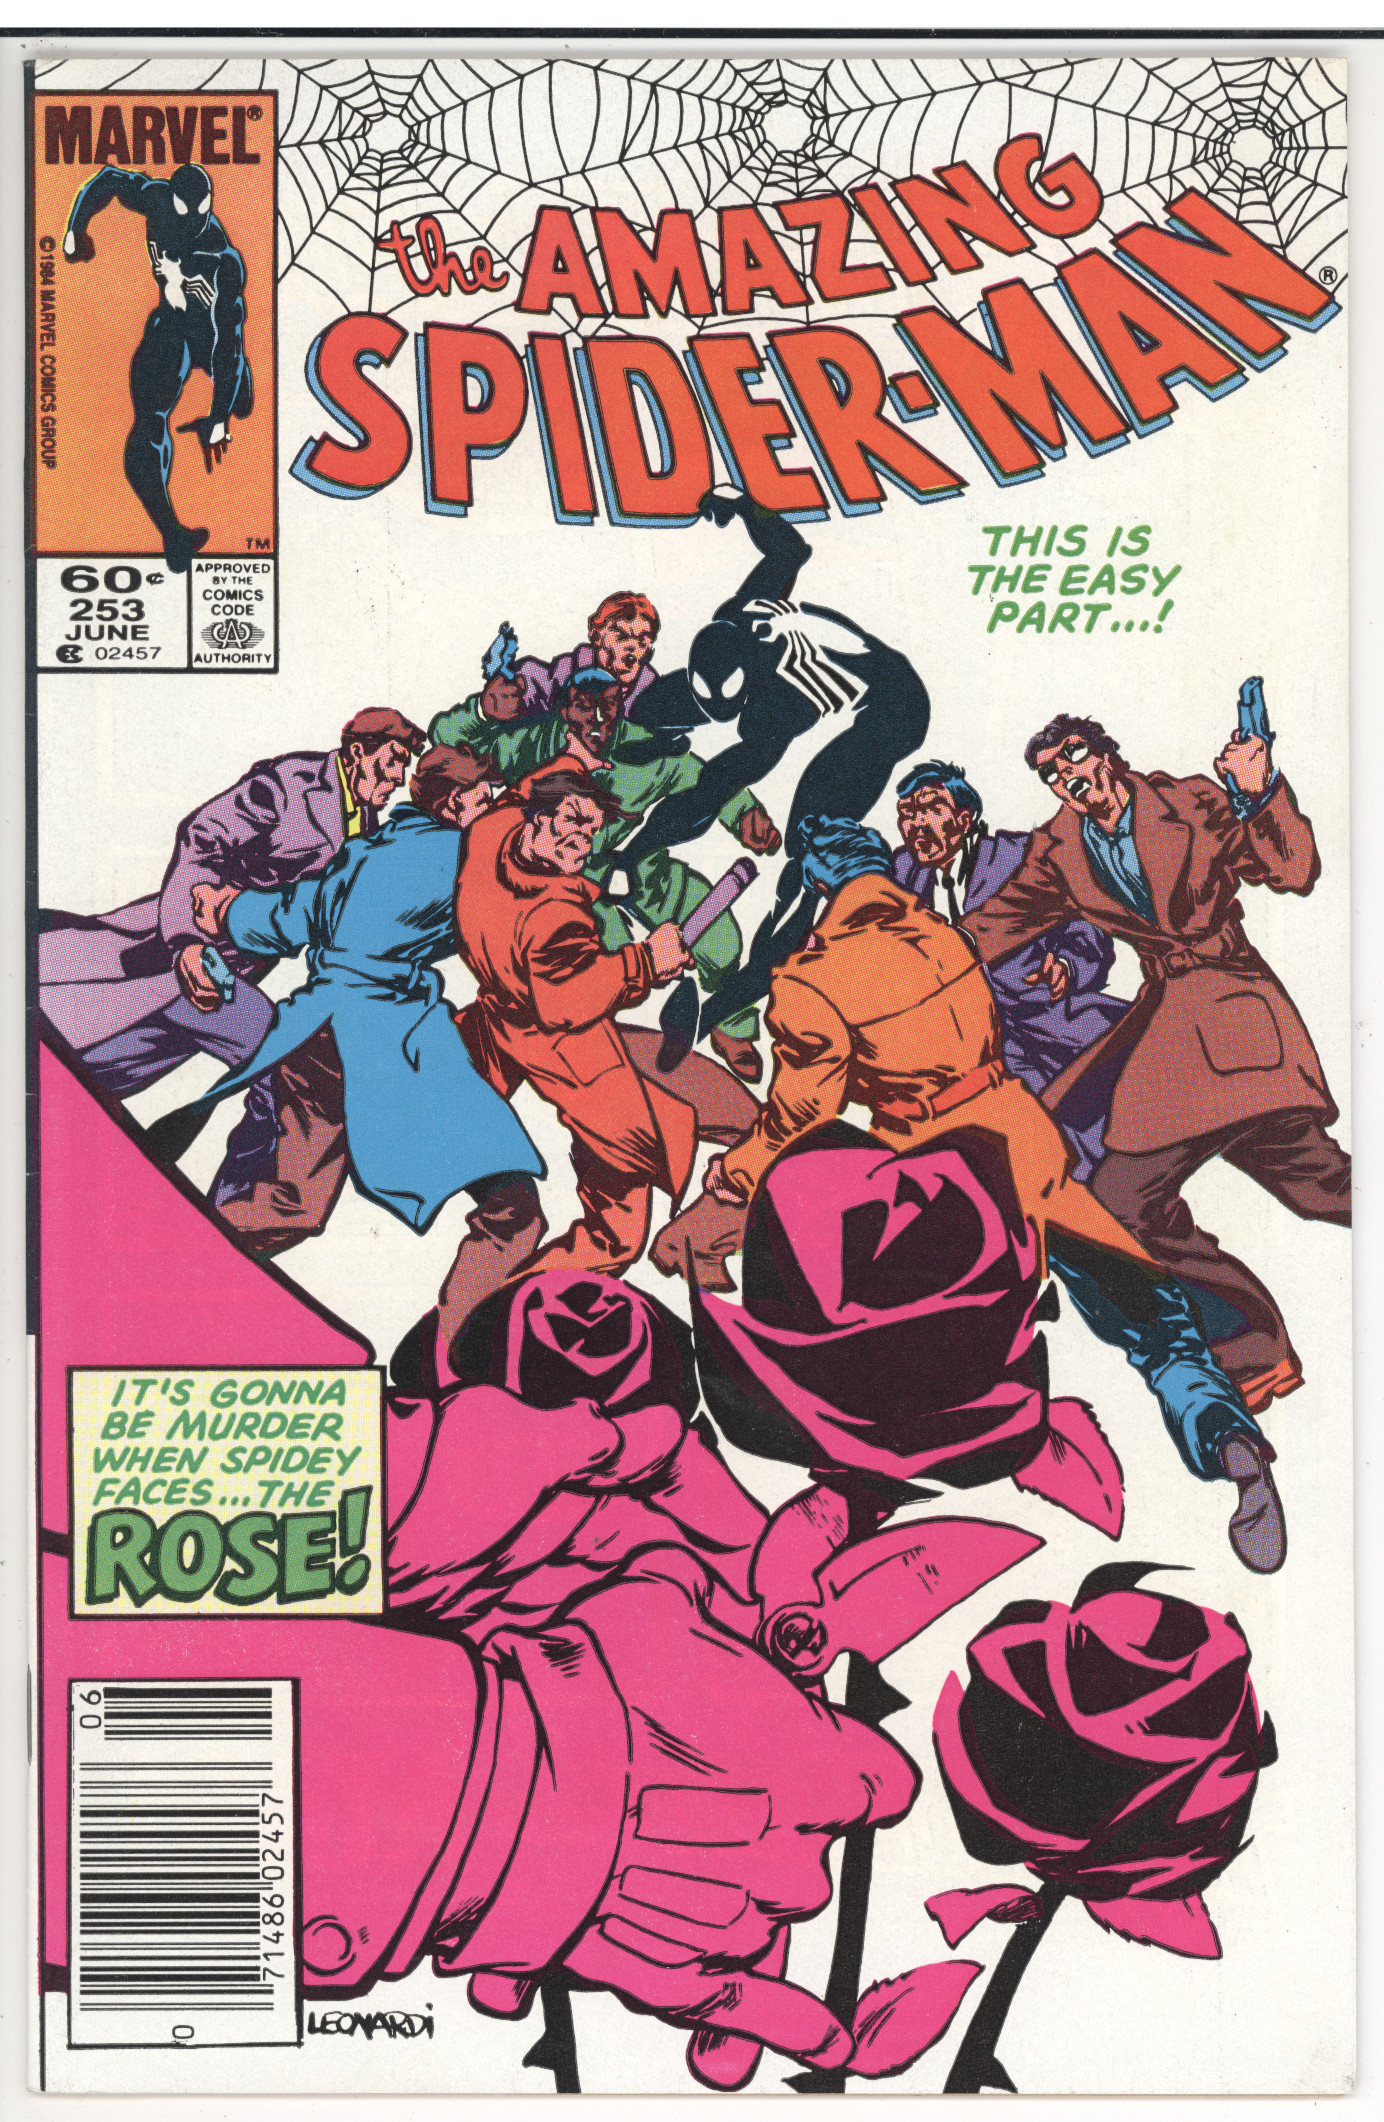 Amazing Spider-Man #253 front